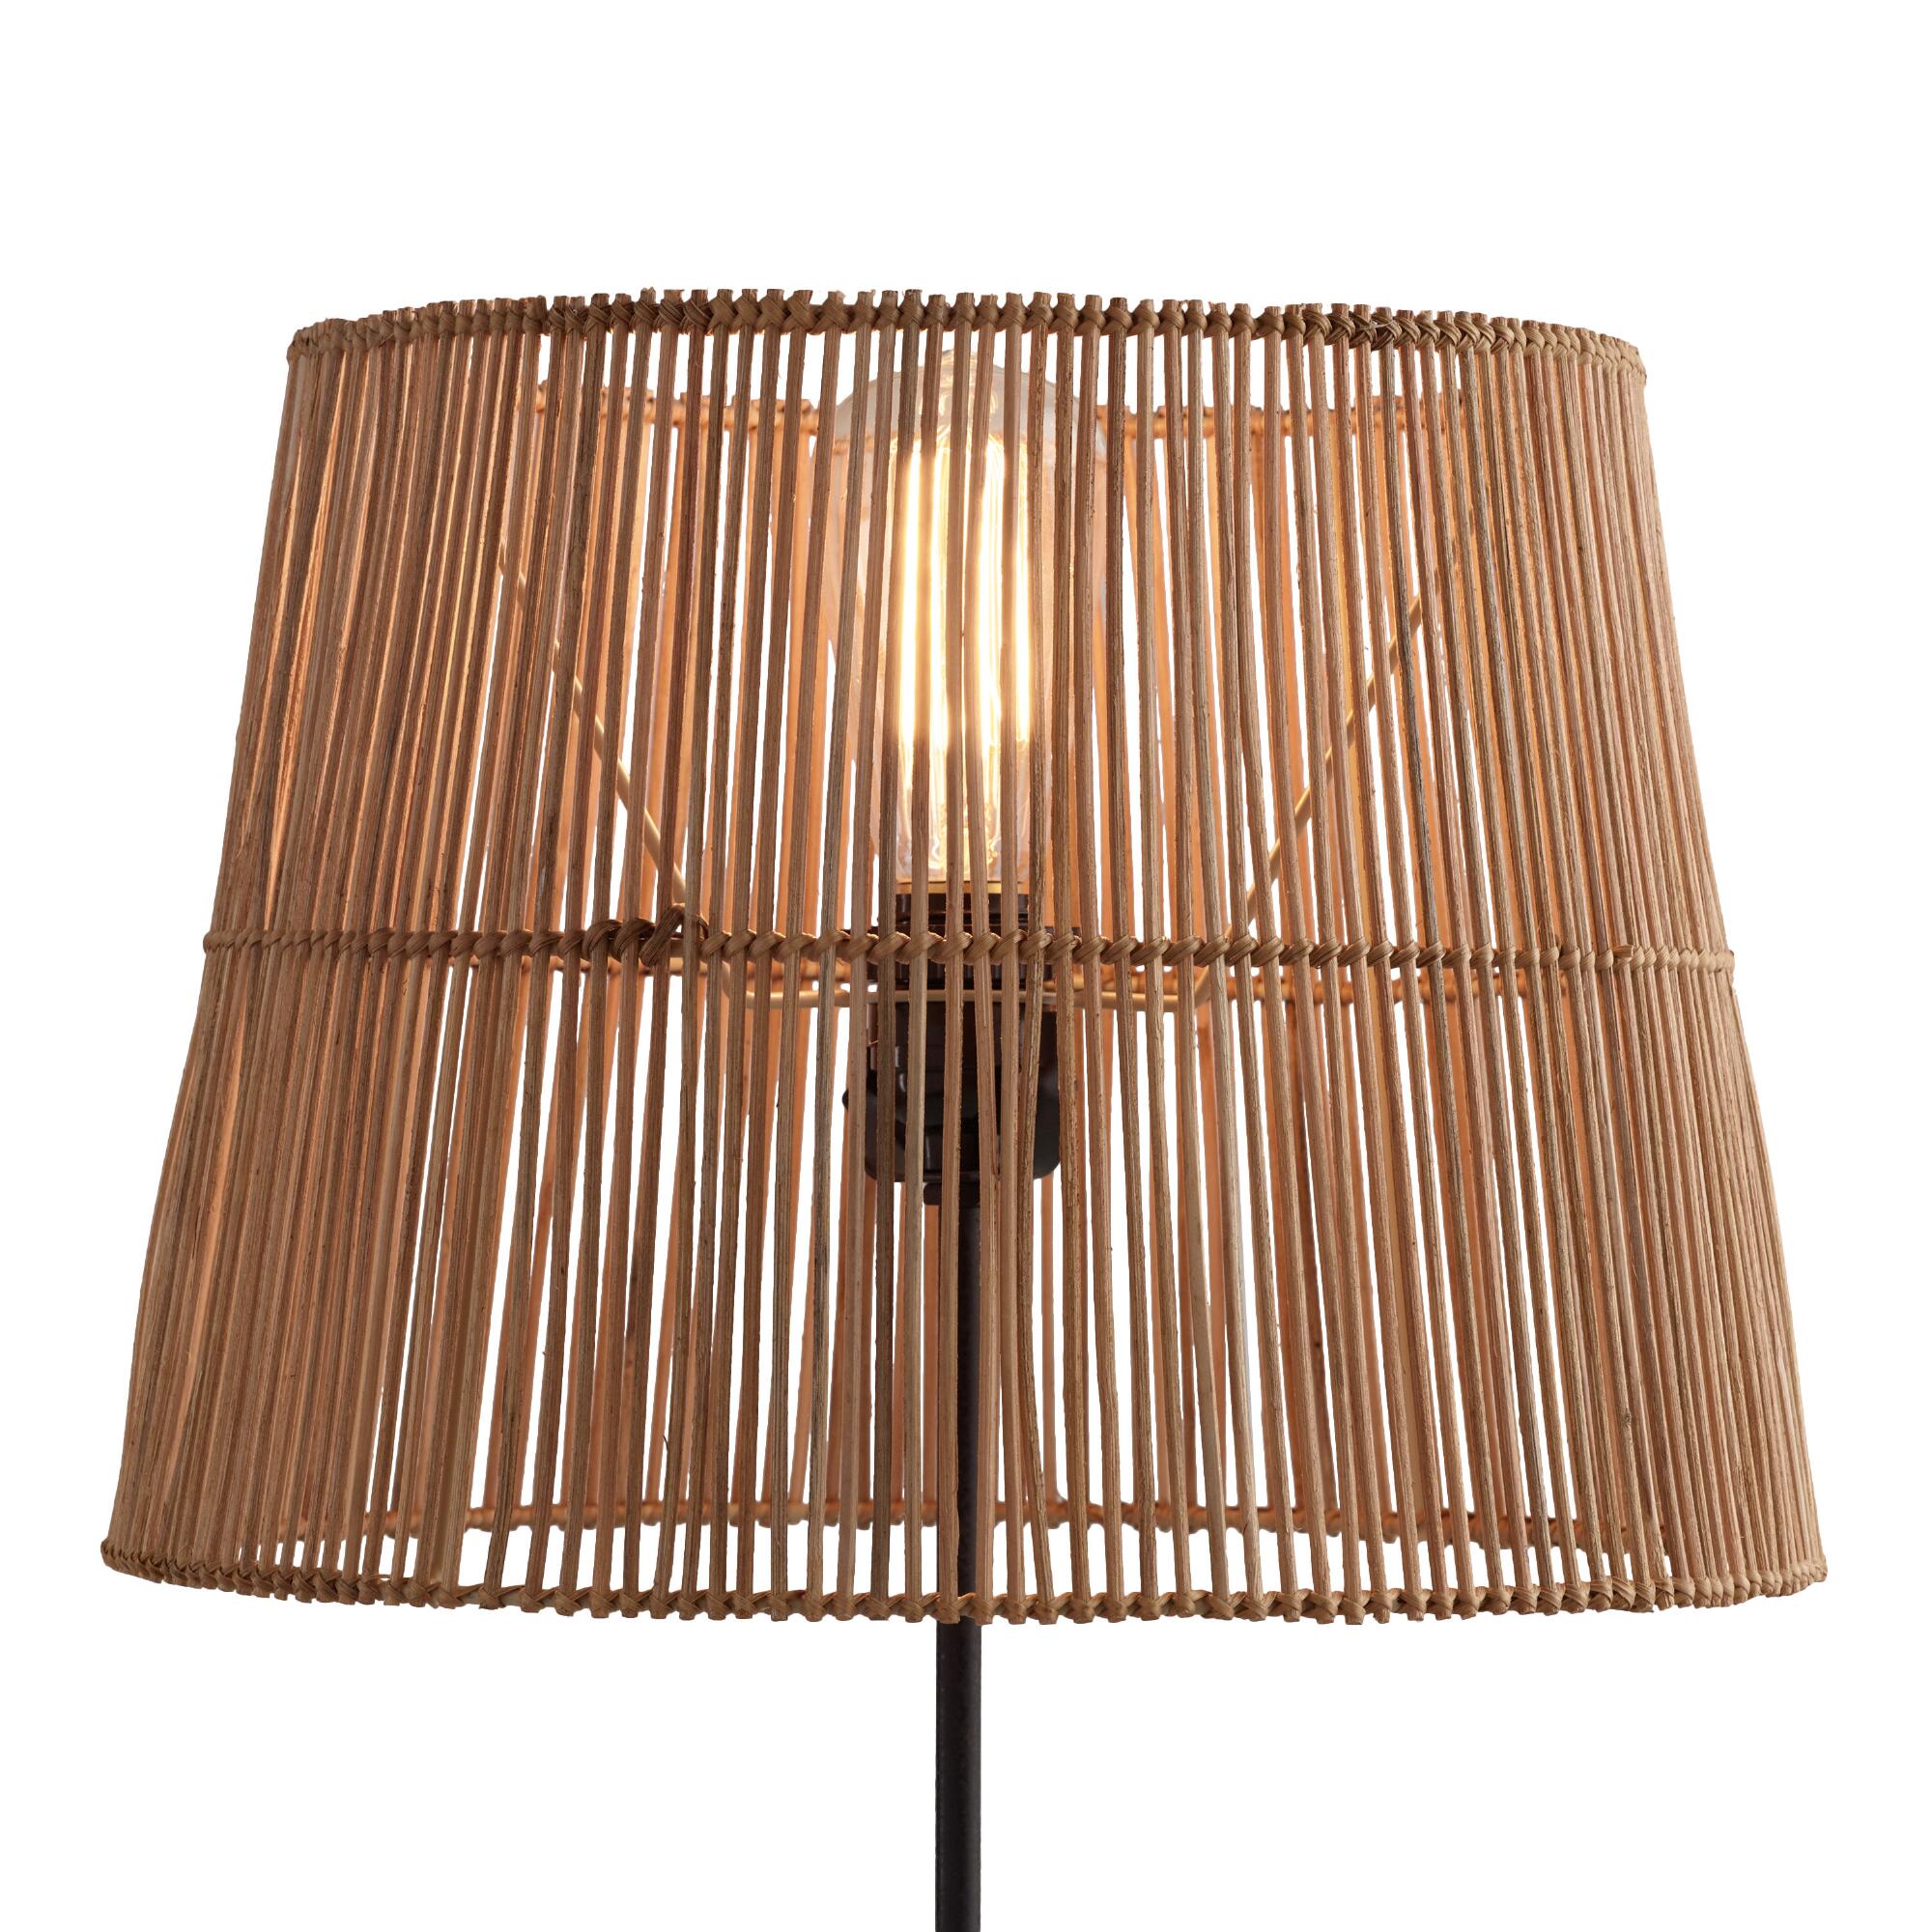 Natural Rattan Table Lamp Shade by World Market